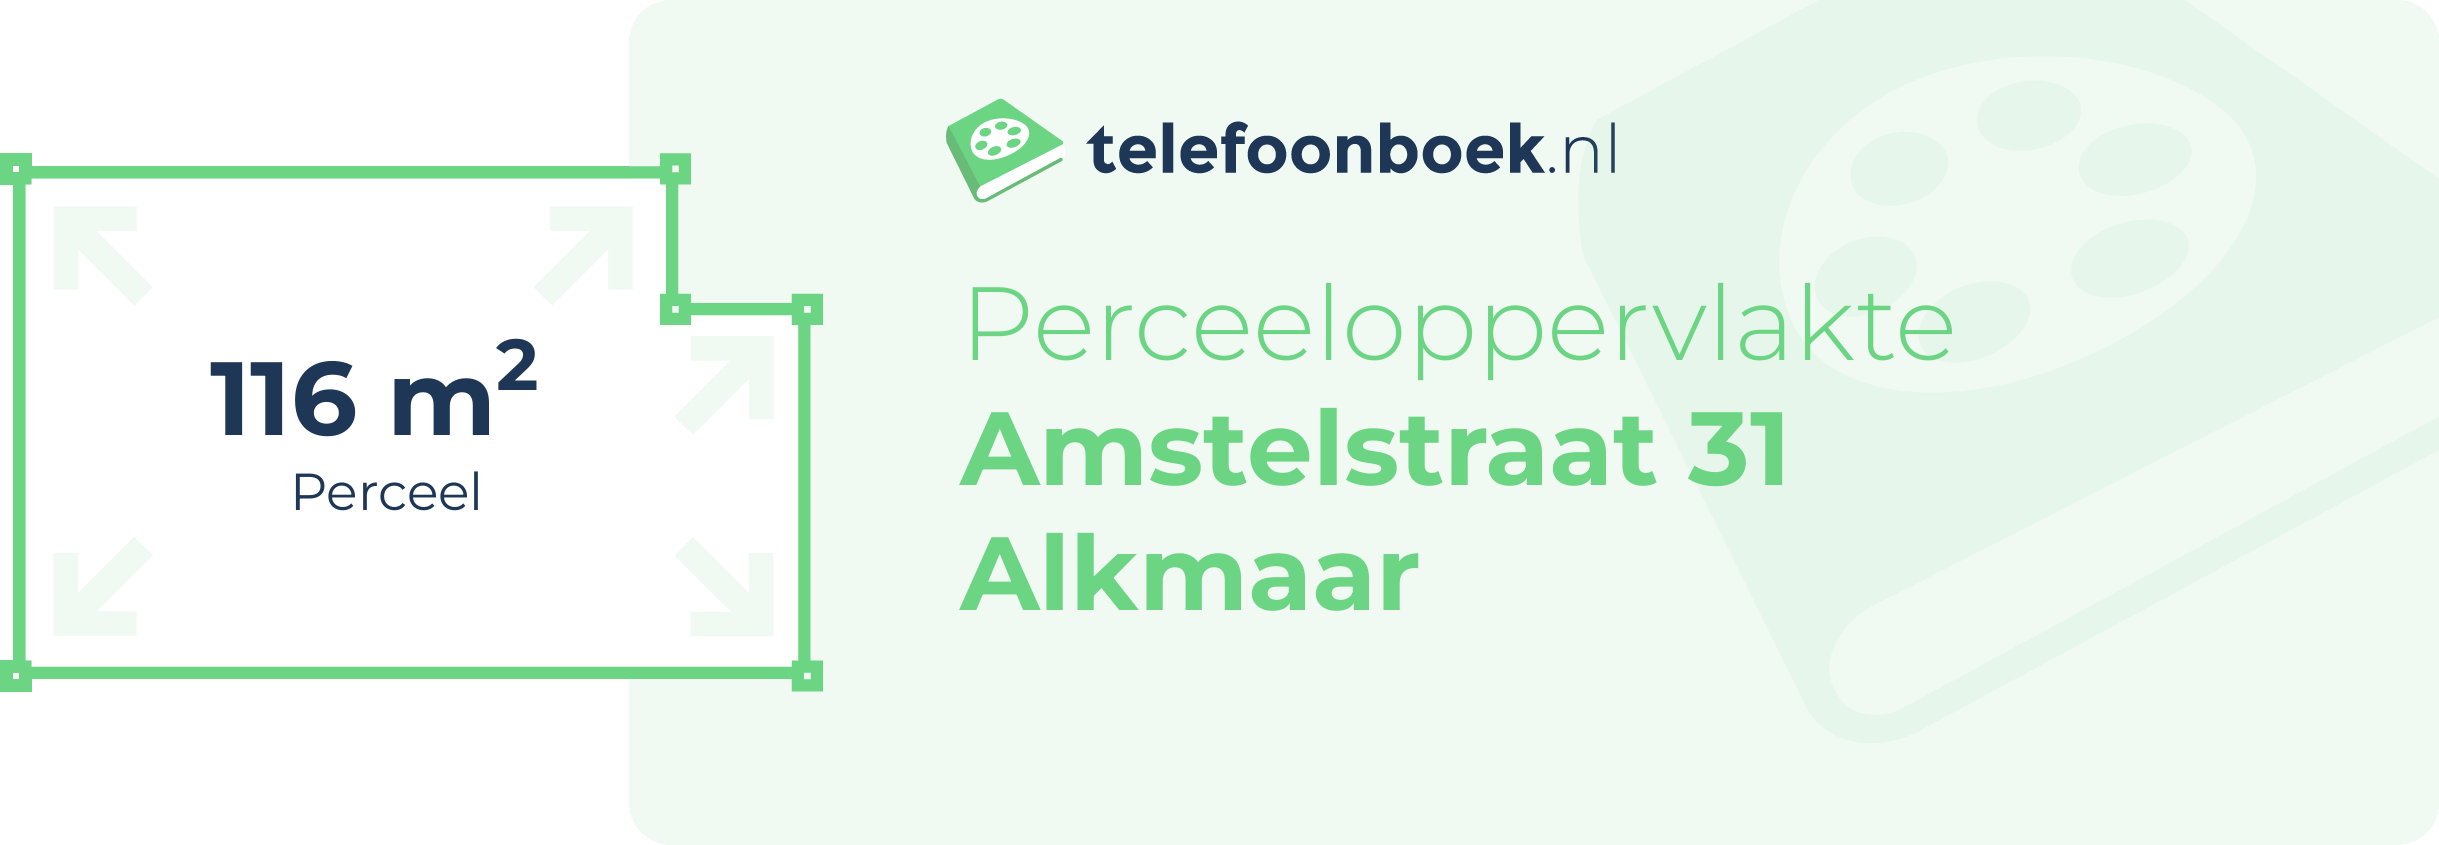 Perceeloppervlakte Amstelstraat 31 Alkmaar